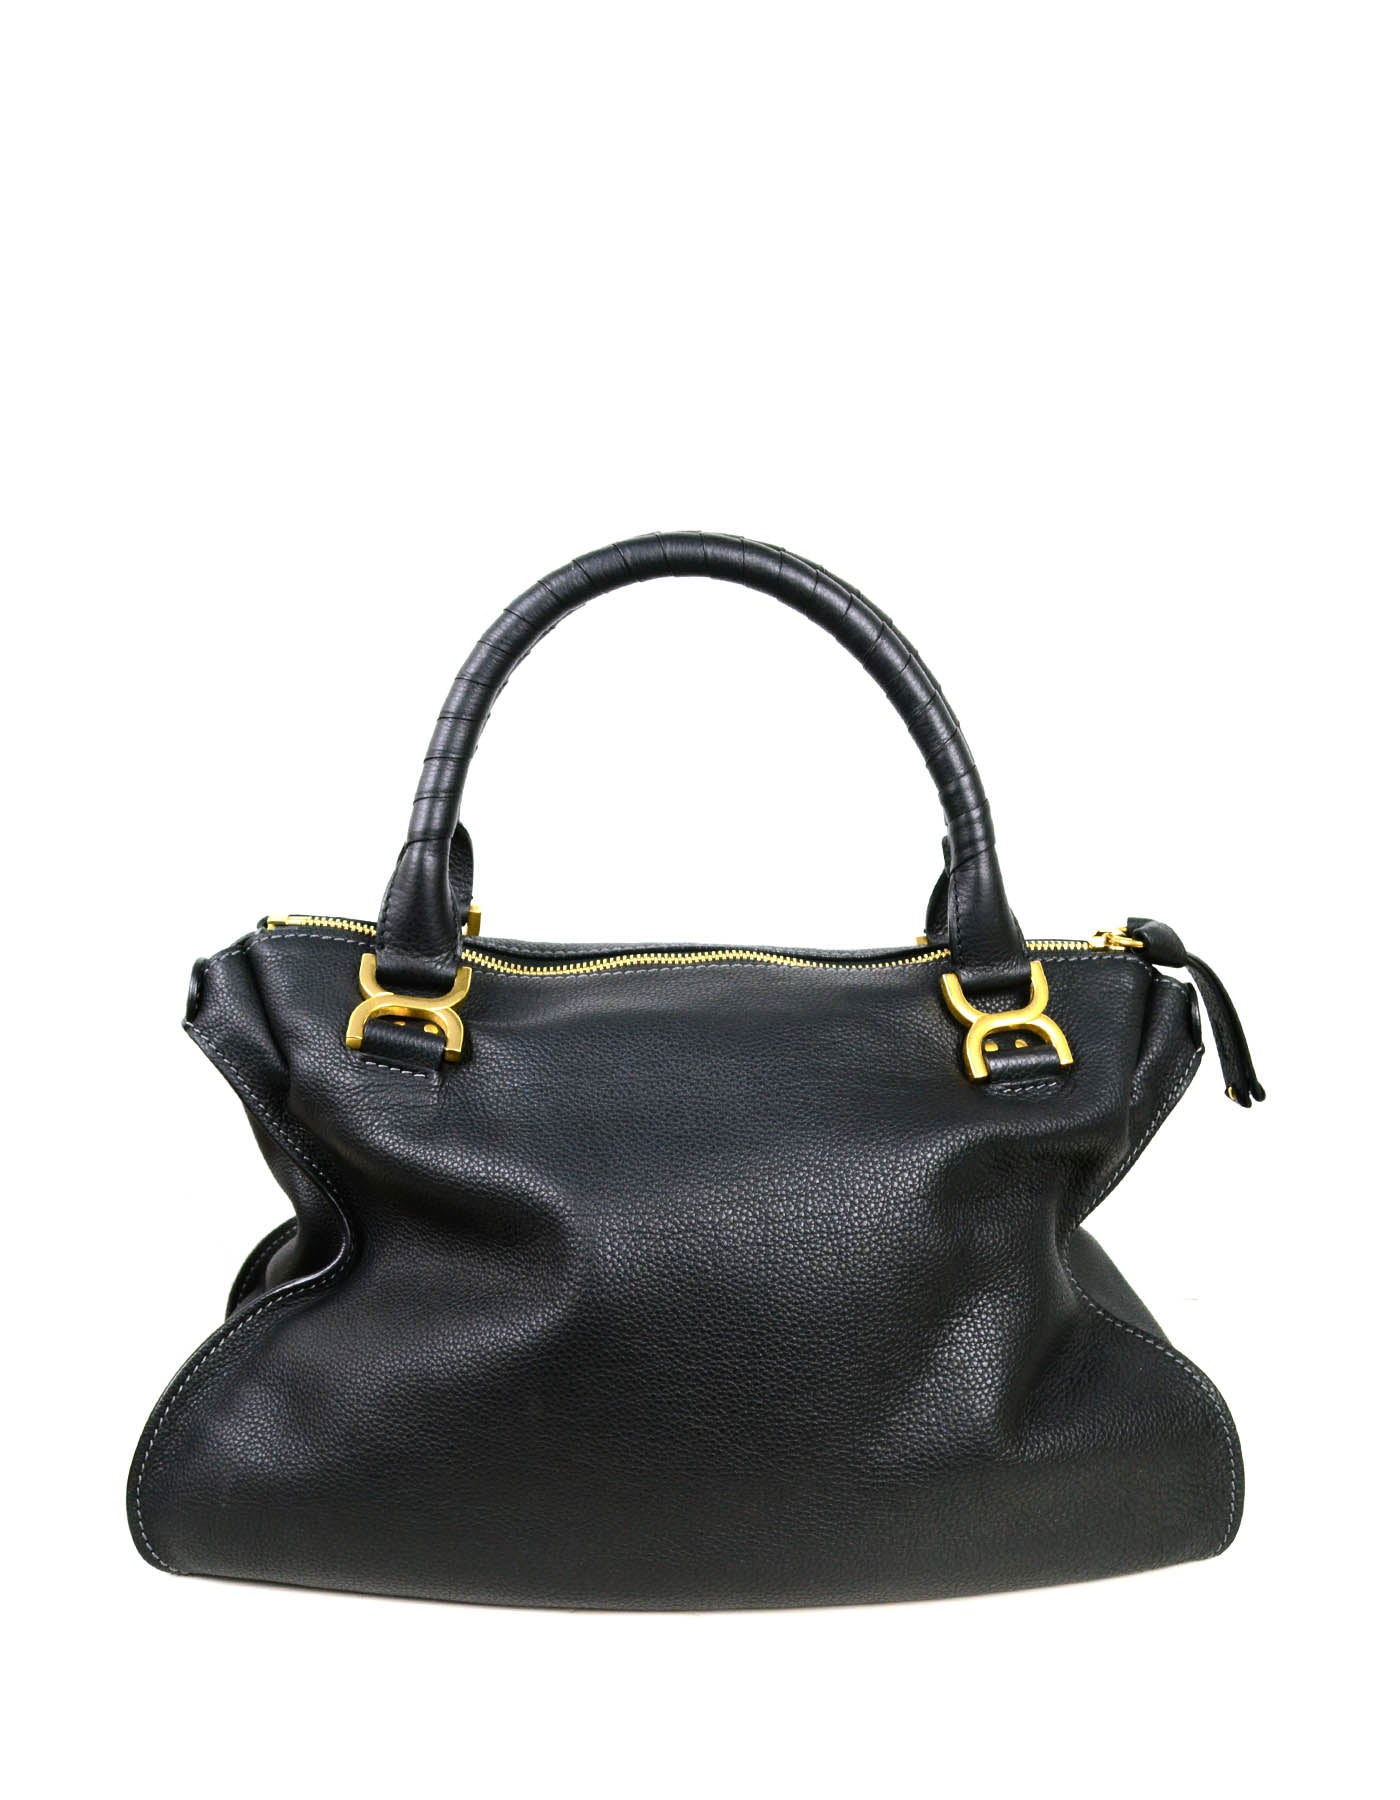 Chloe Black Leather Large Marcie Bag